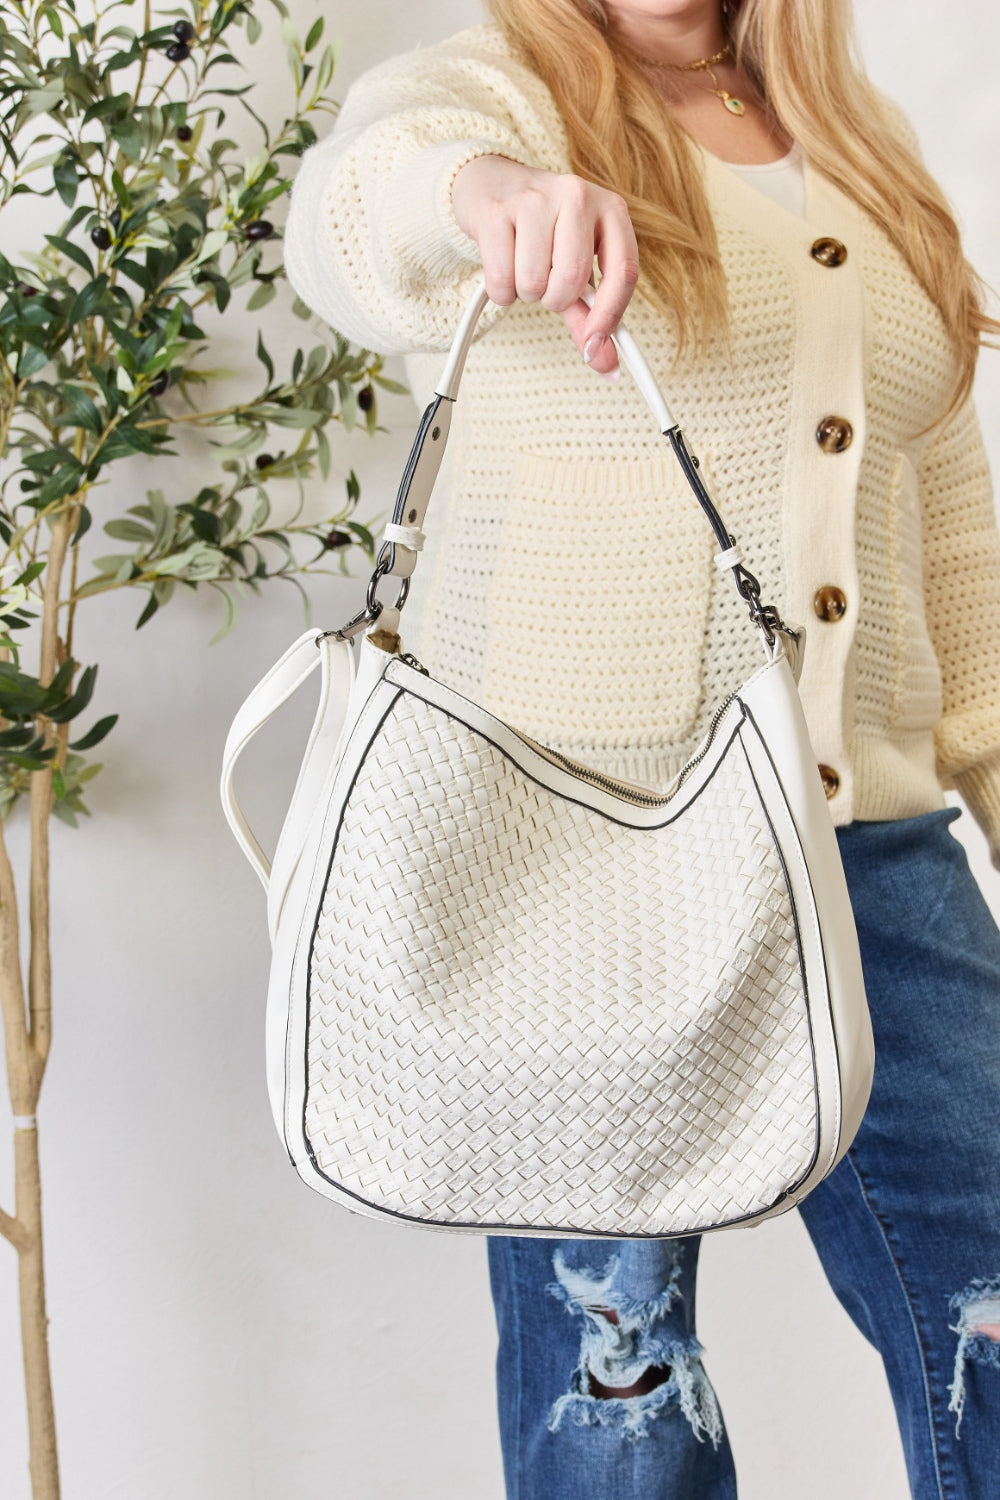 SHOMICO Weaved Vegan Leather Handbag Accessories for women